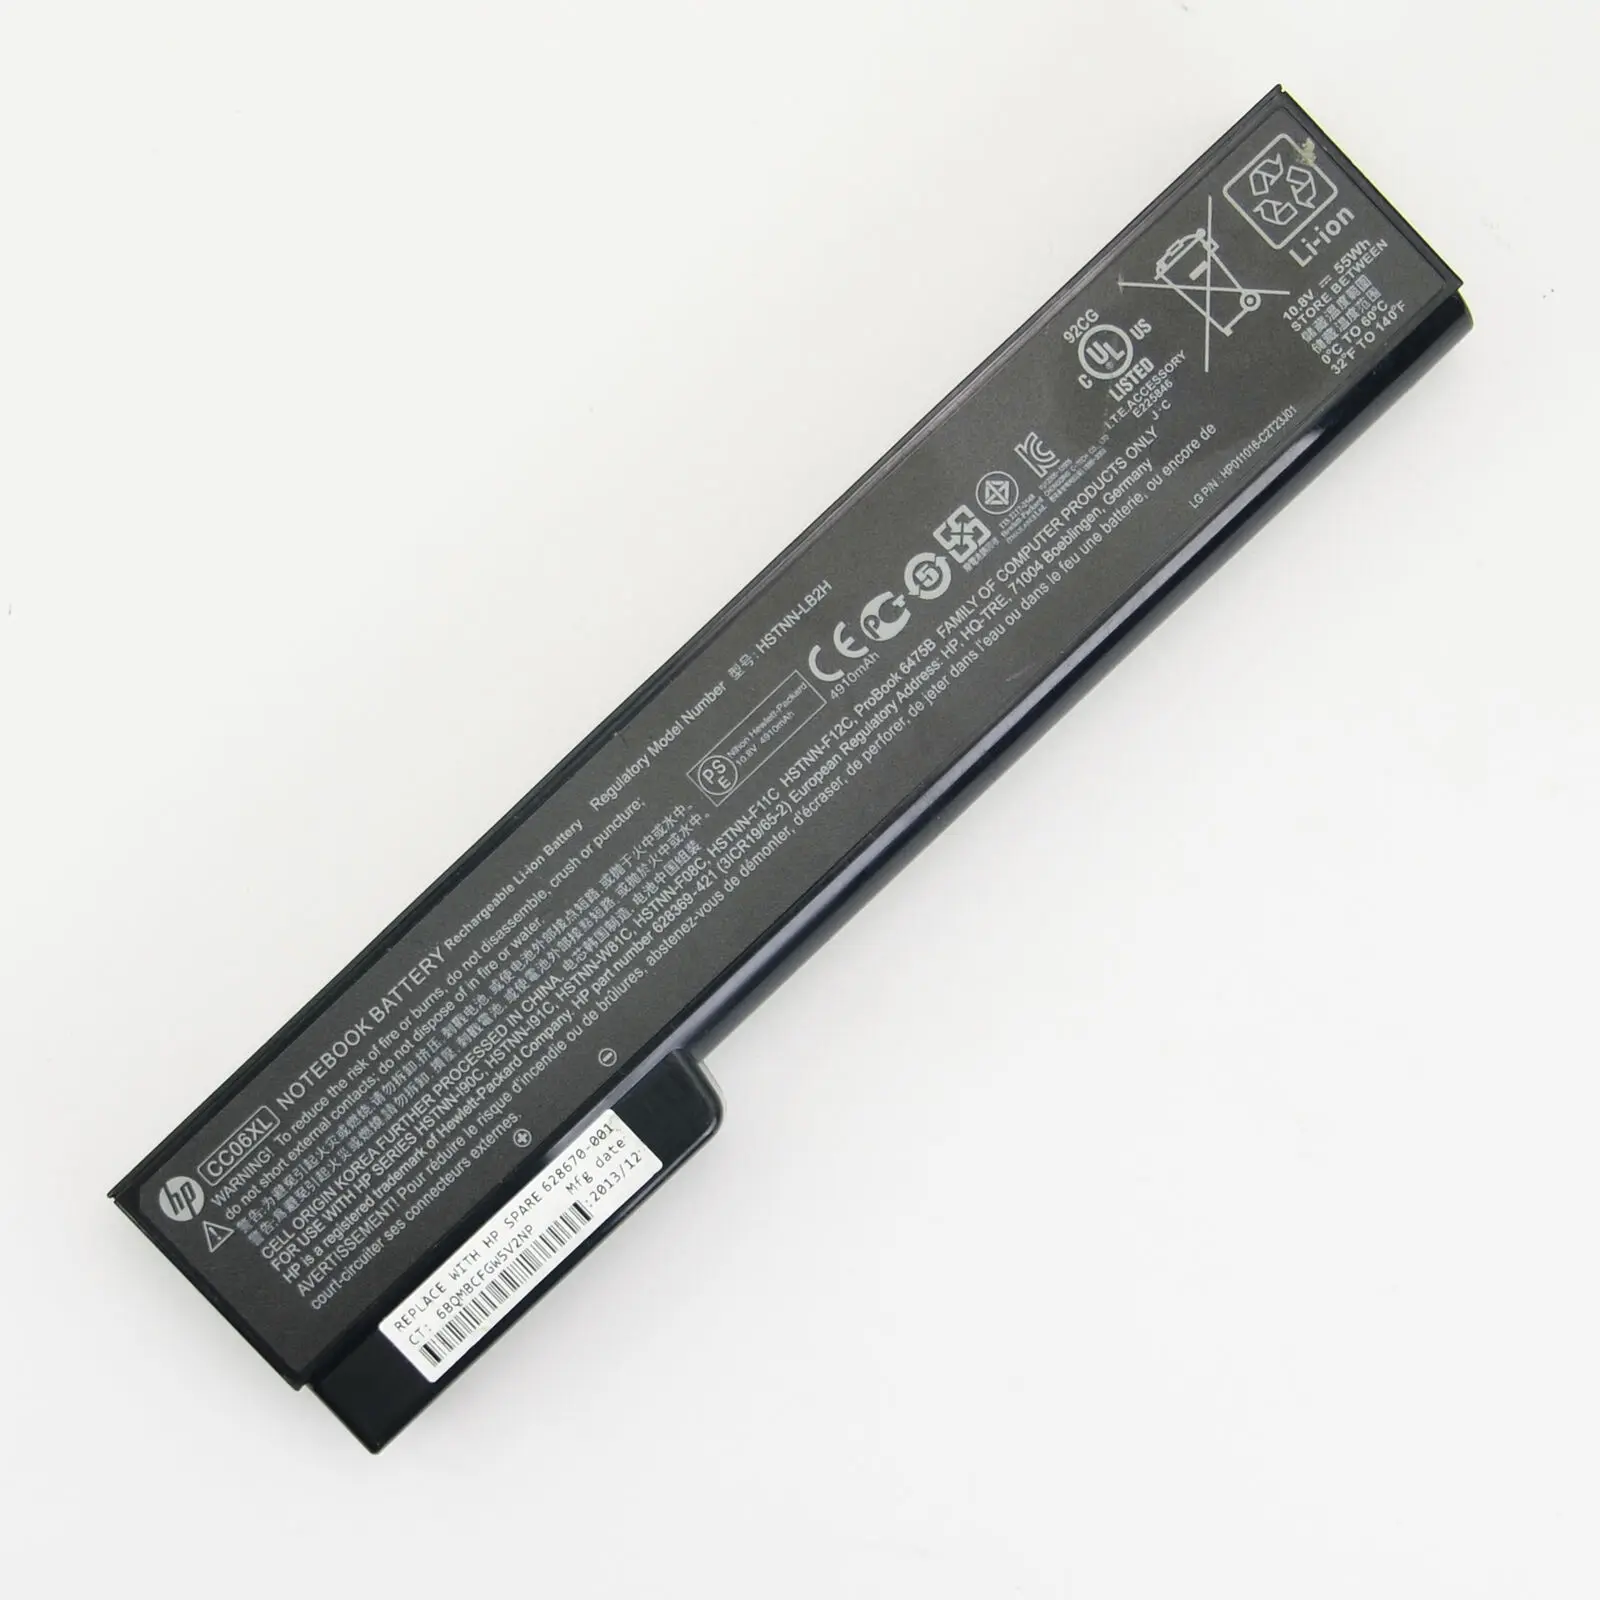 Duracell ultra battery for hp elitebook 8460p laptop - long-lasting power solution